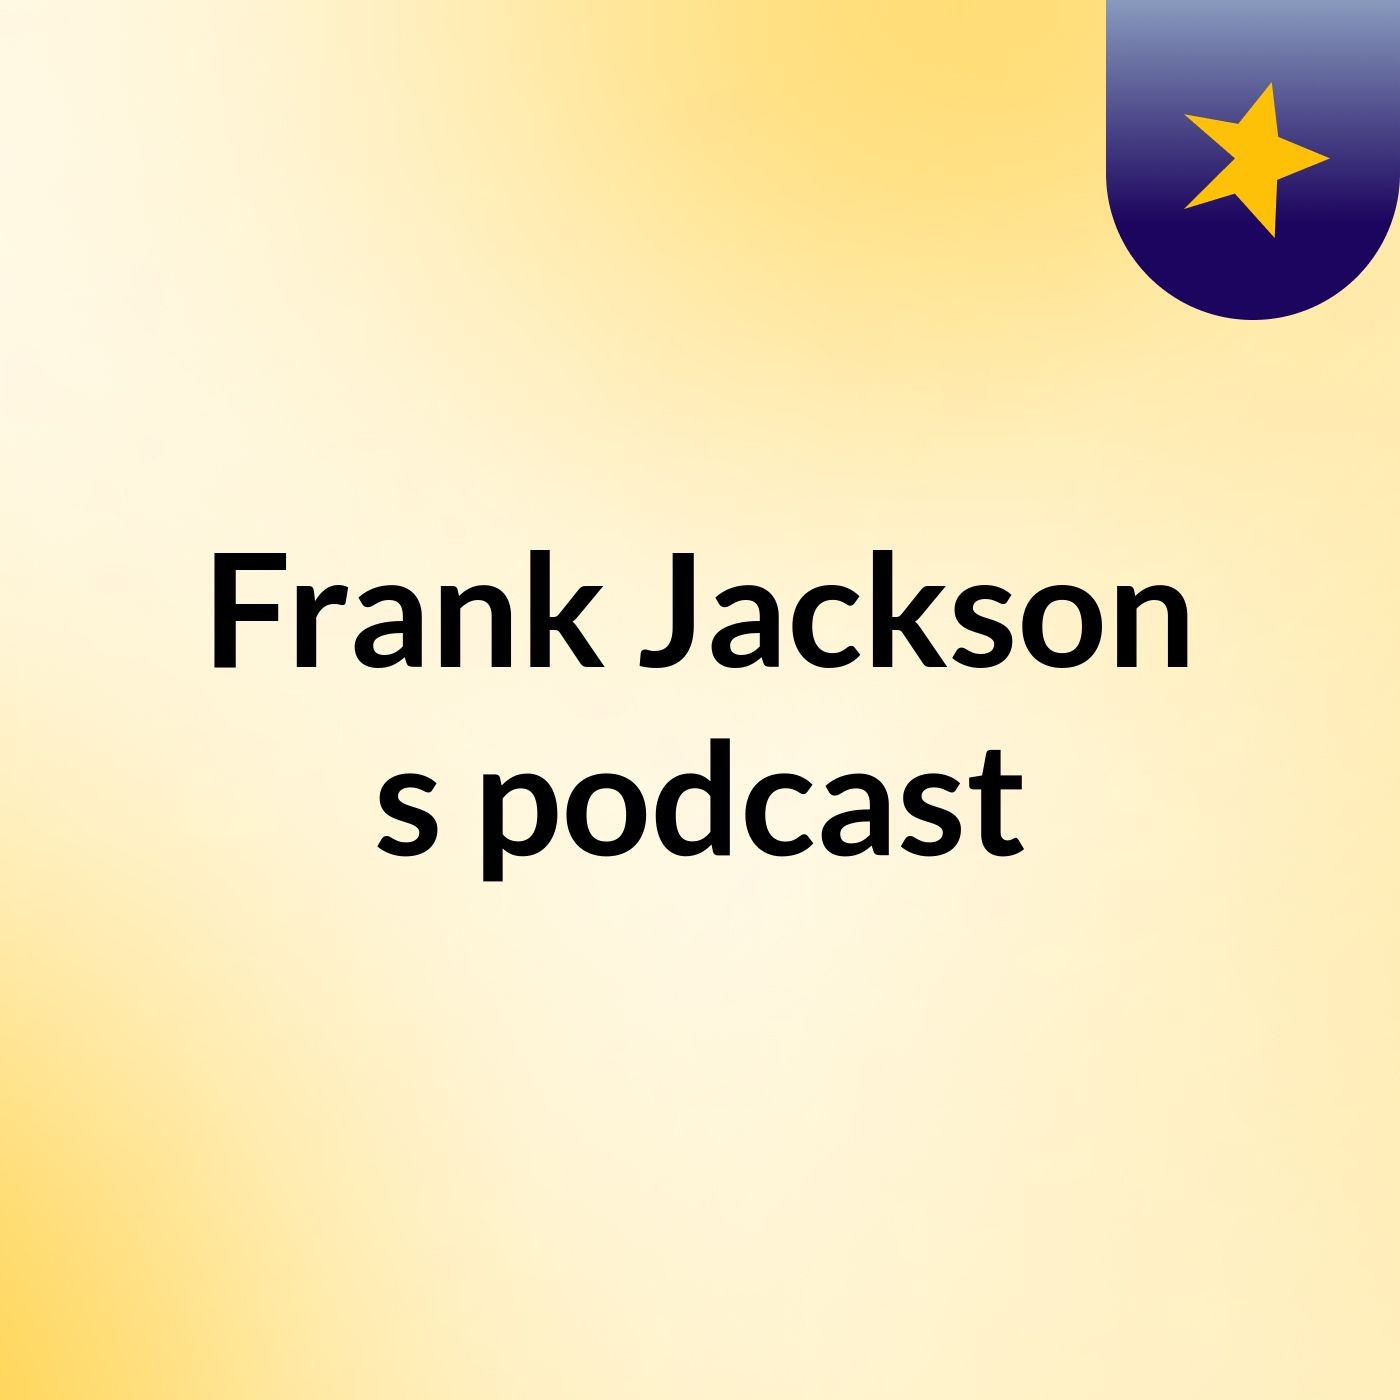 Frank Jackson's podcast